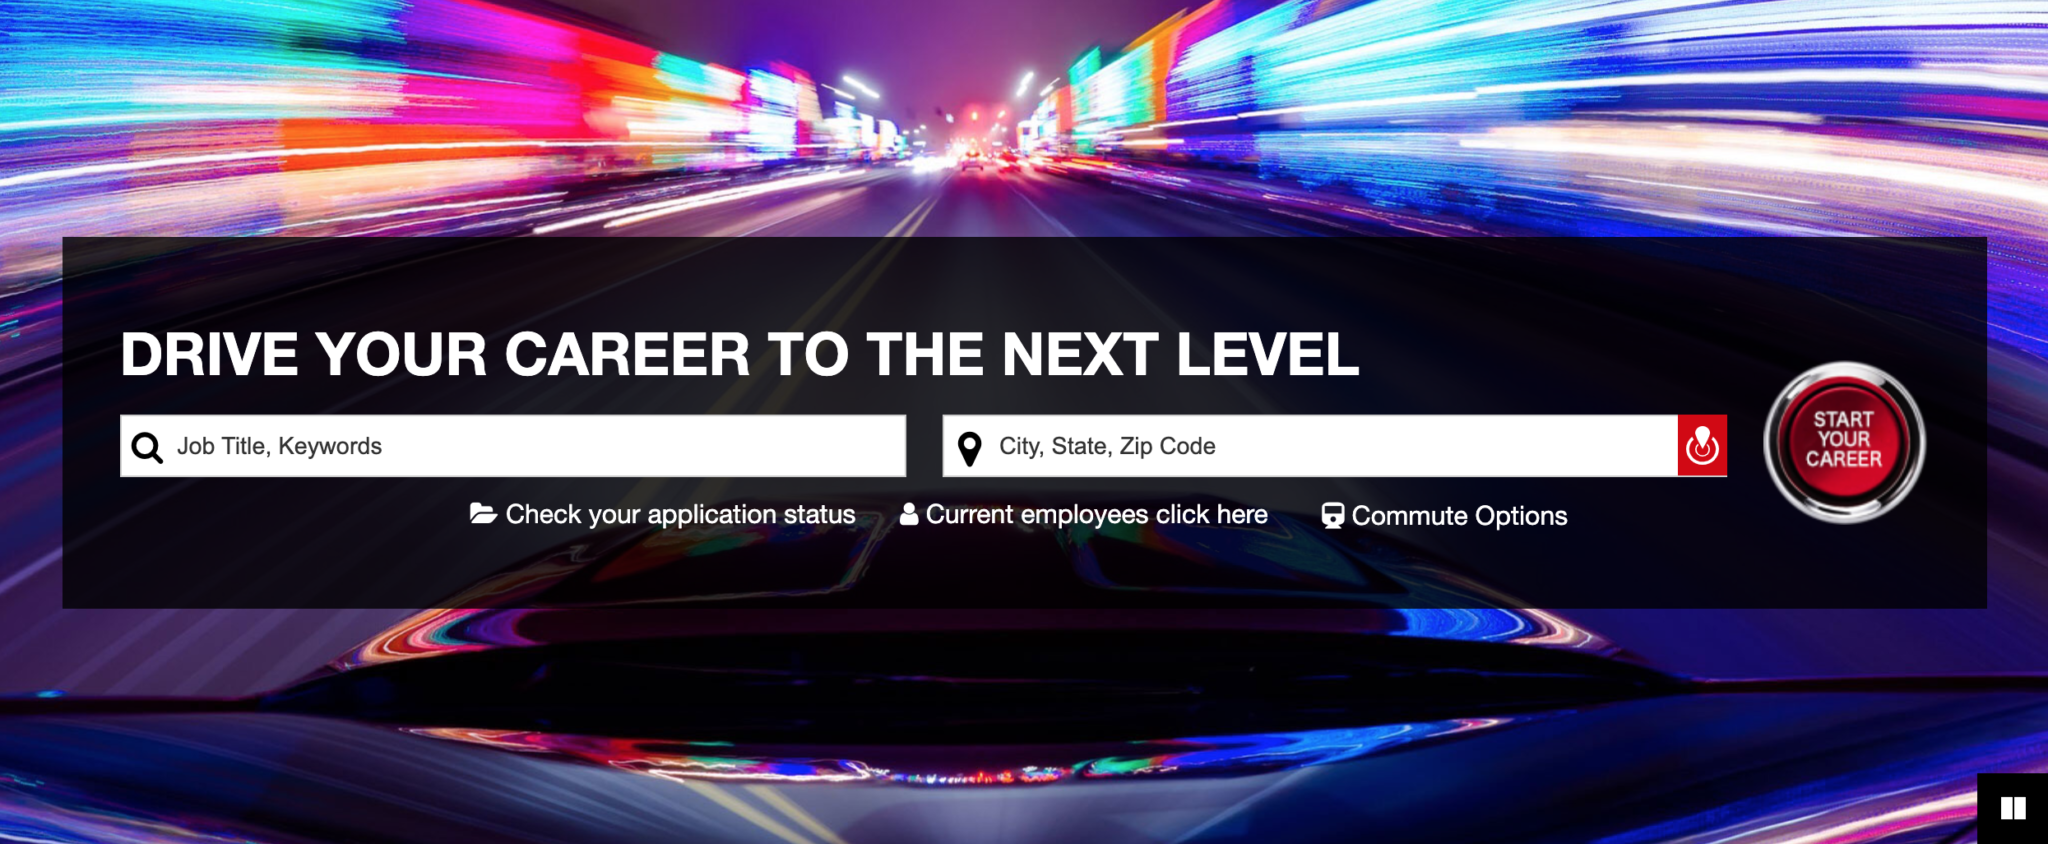 Penske Automotive Group Google Talent Job Search Capabilities